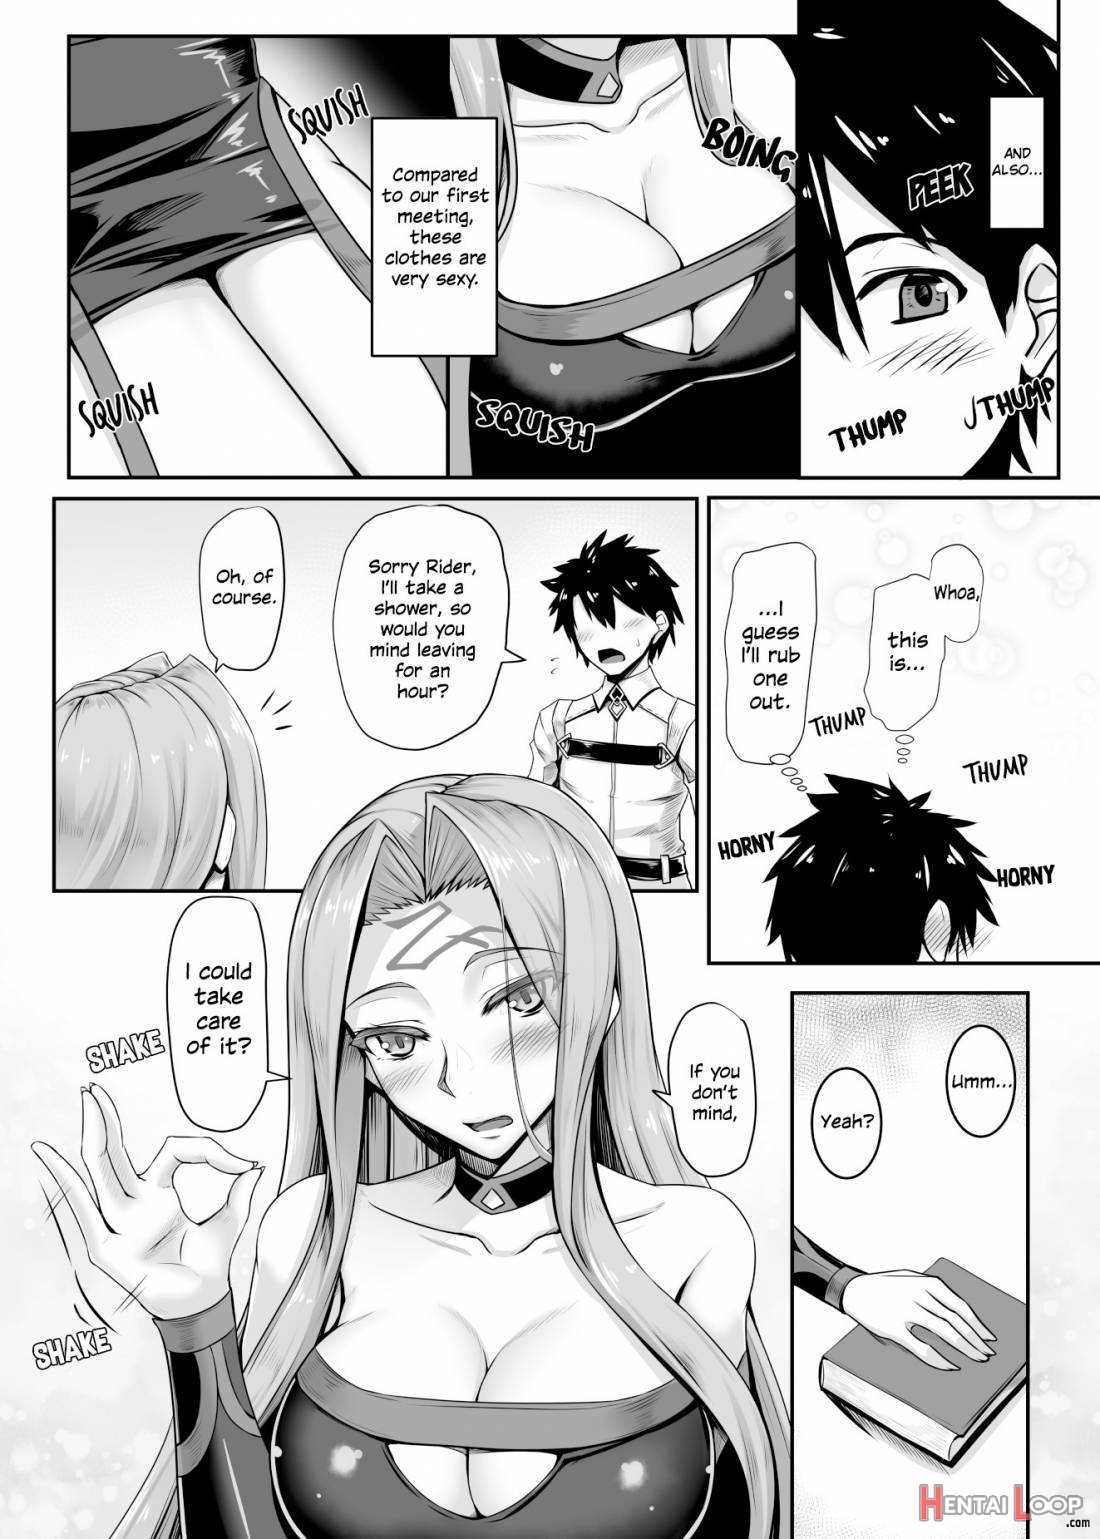 Kizuna MAX Rider-san page 3